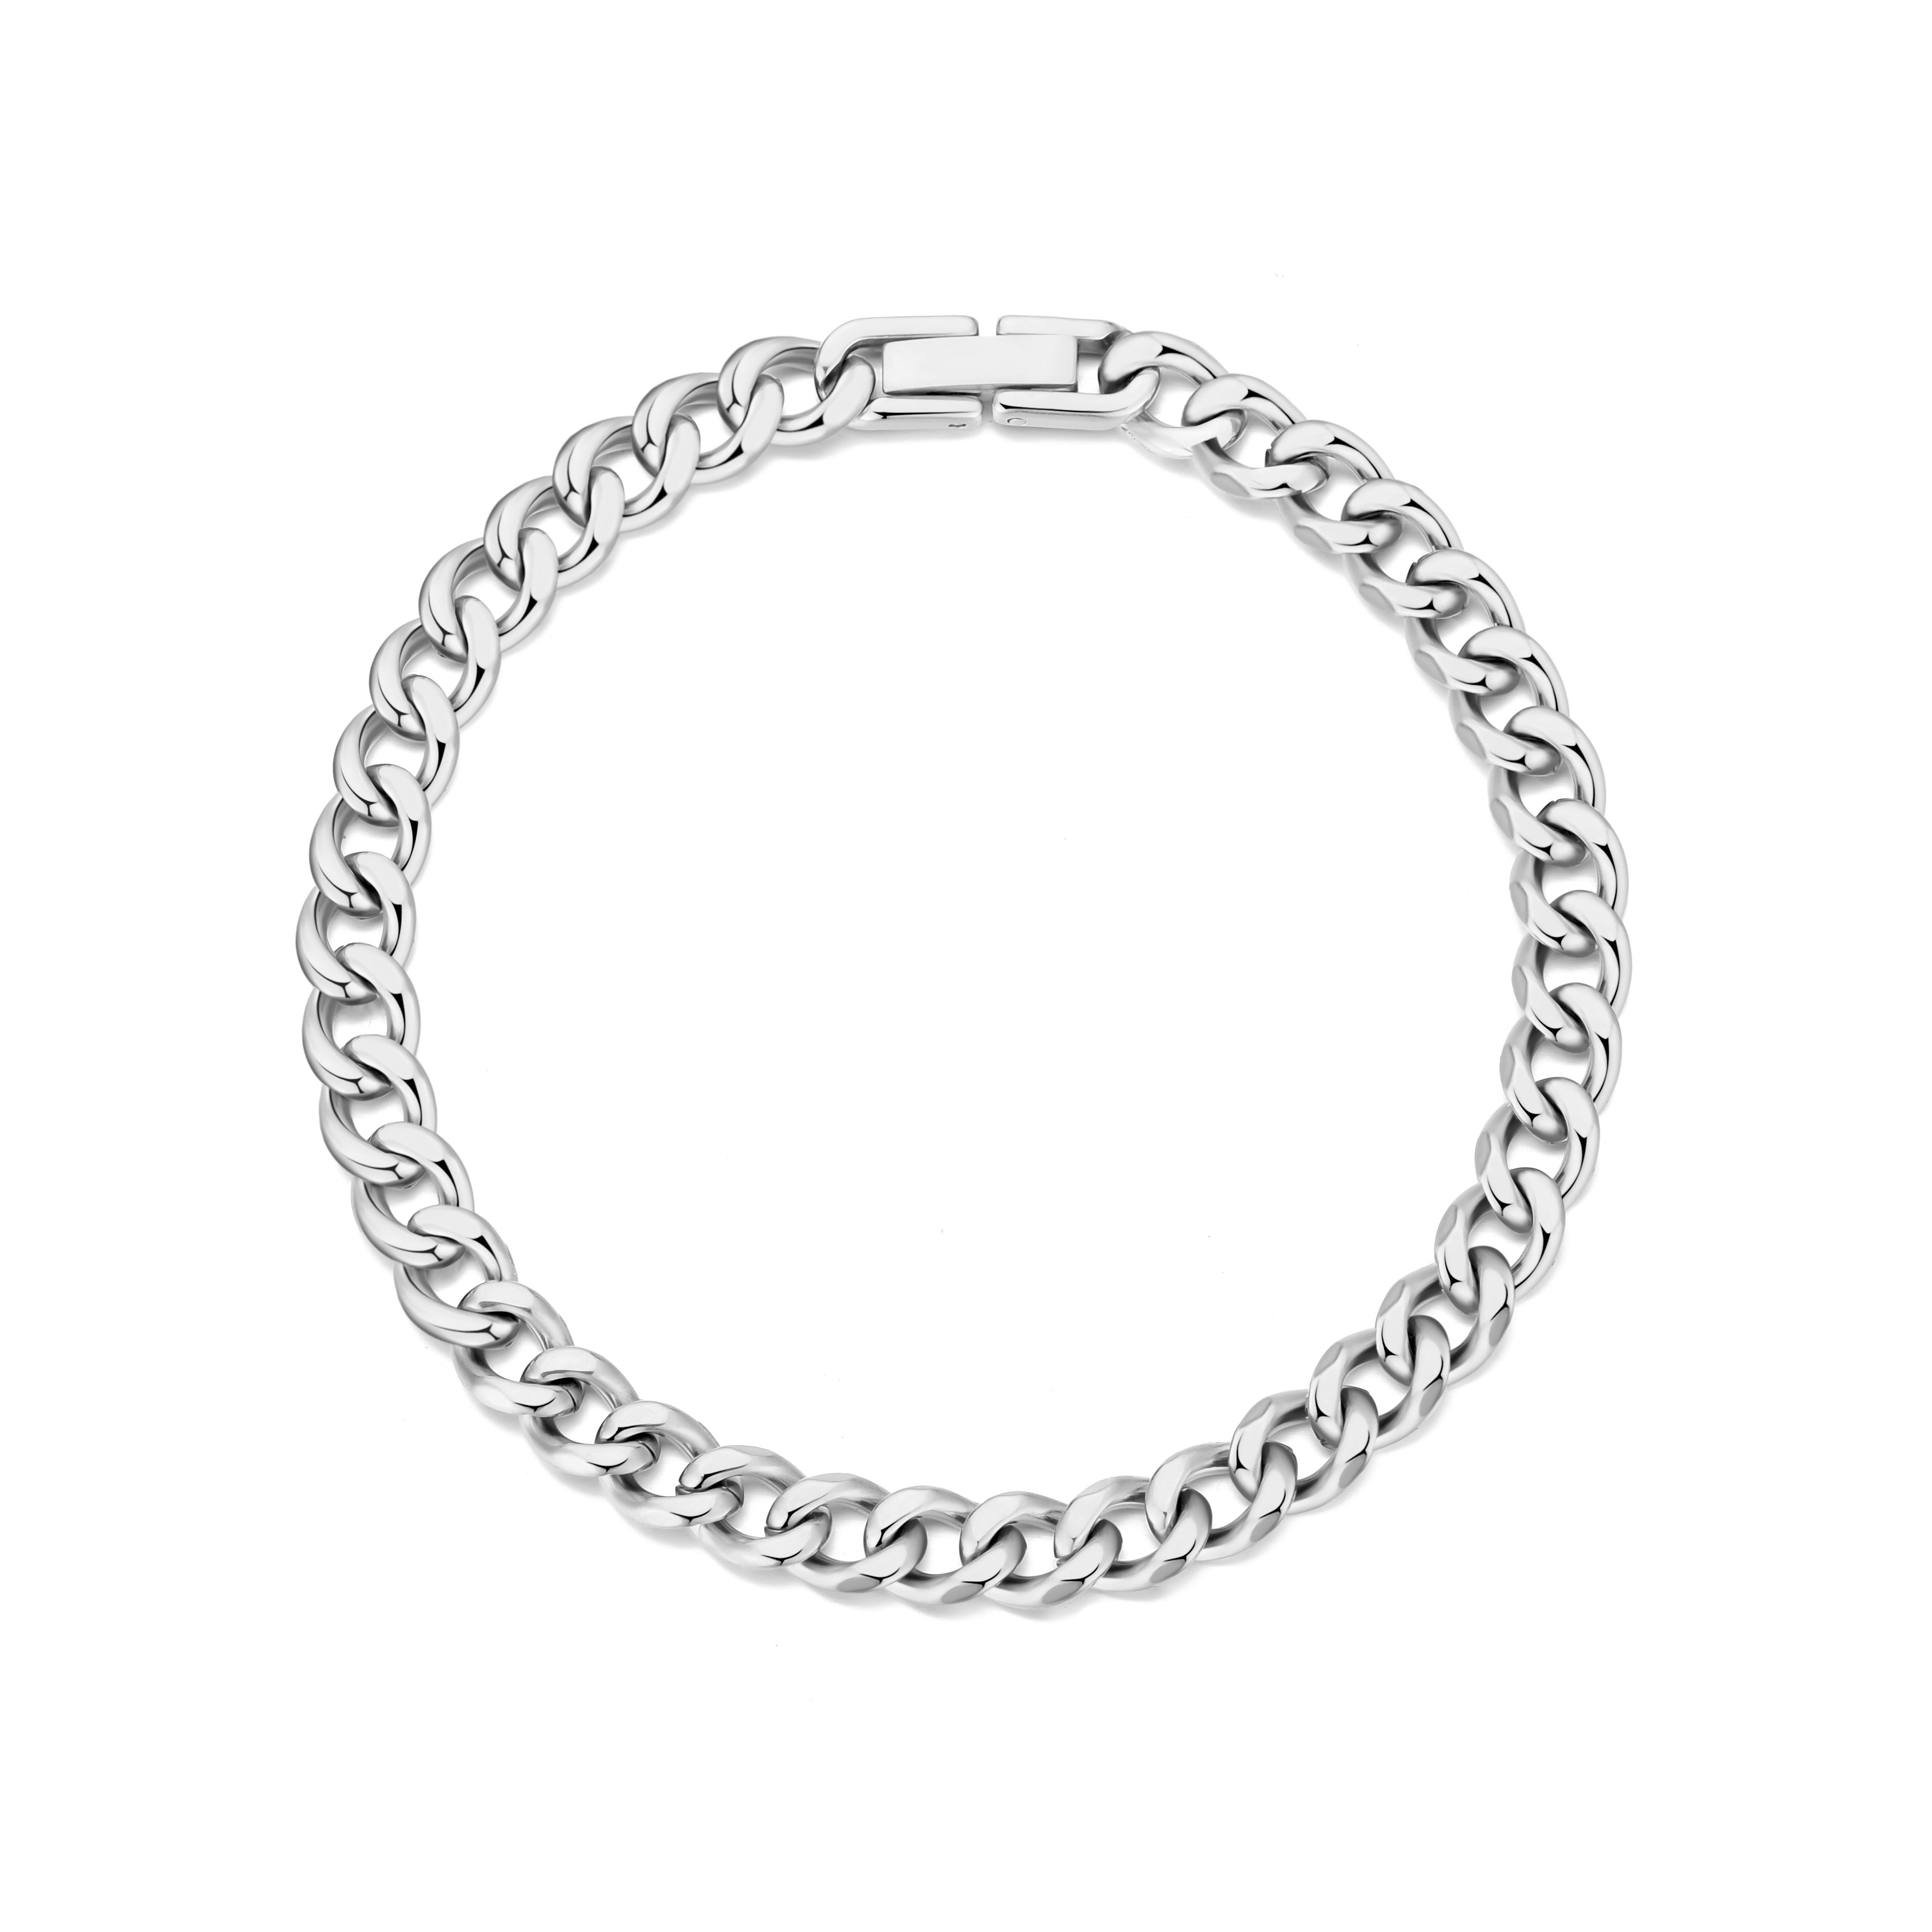 Men's 6mm Stainless Steel 7.5-8.5 Inch Curb Chain Bracelet by Philip Jones Jewellery